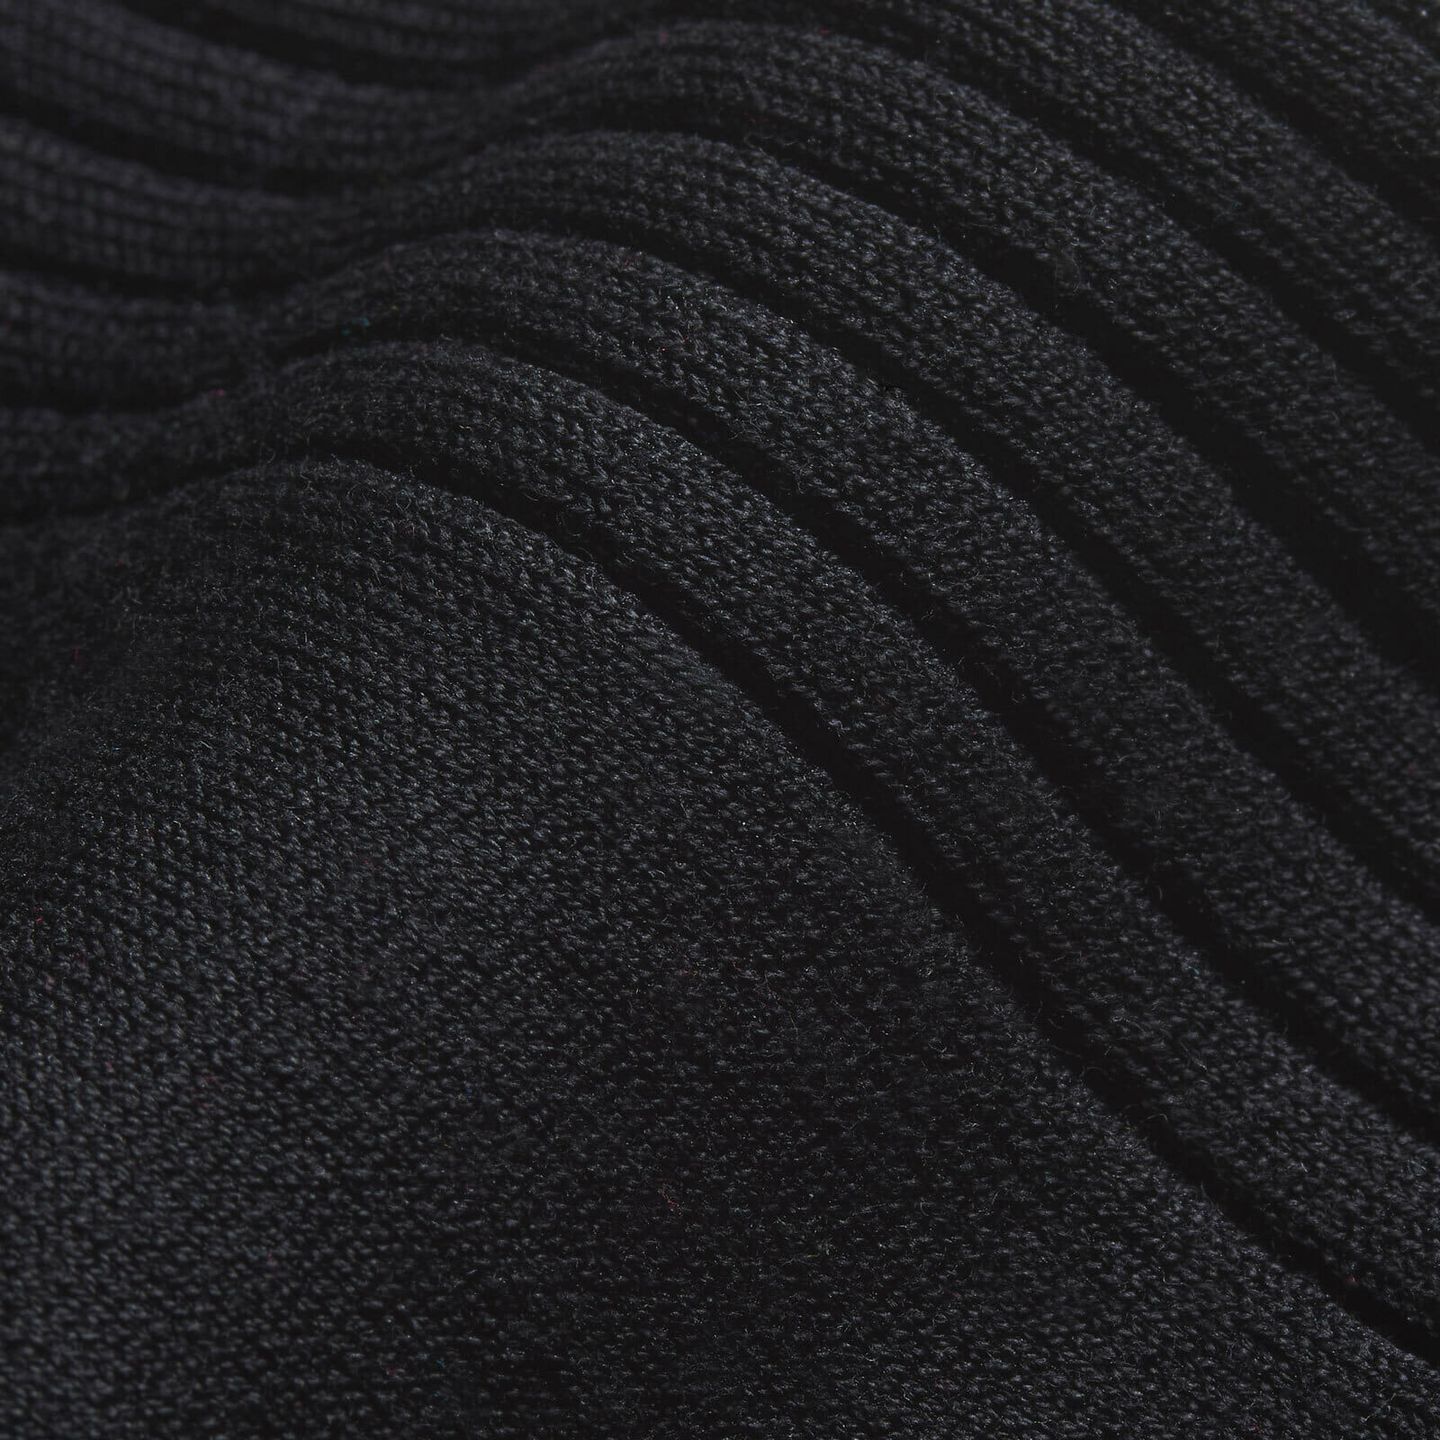 Close up of ebony black socks